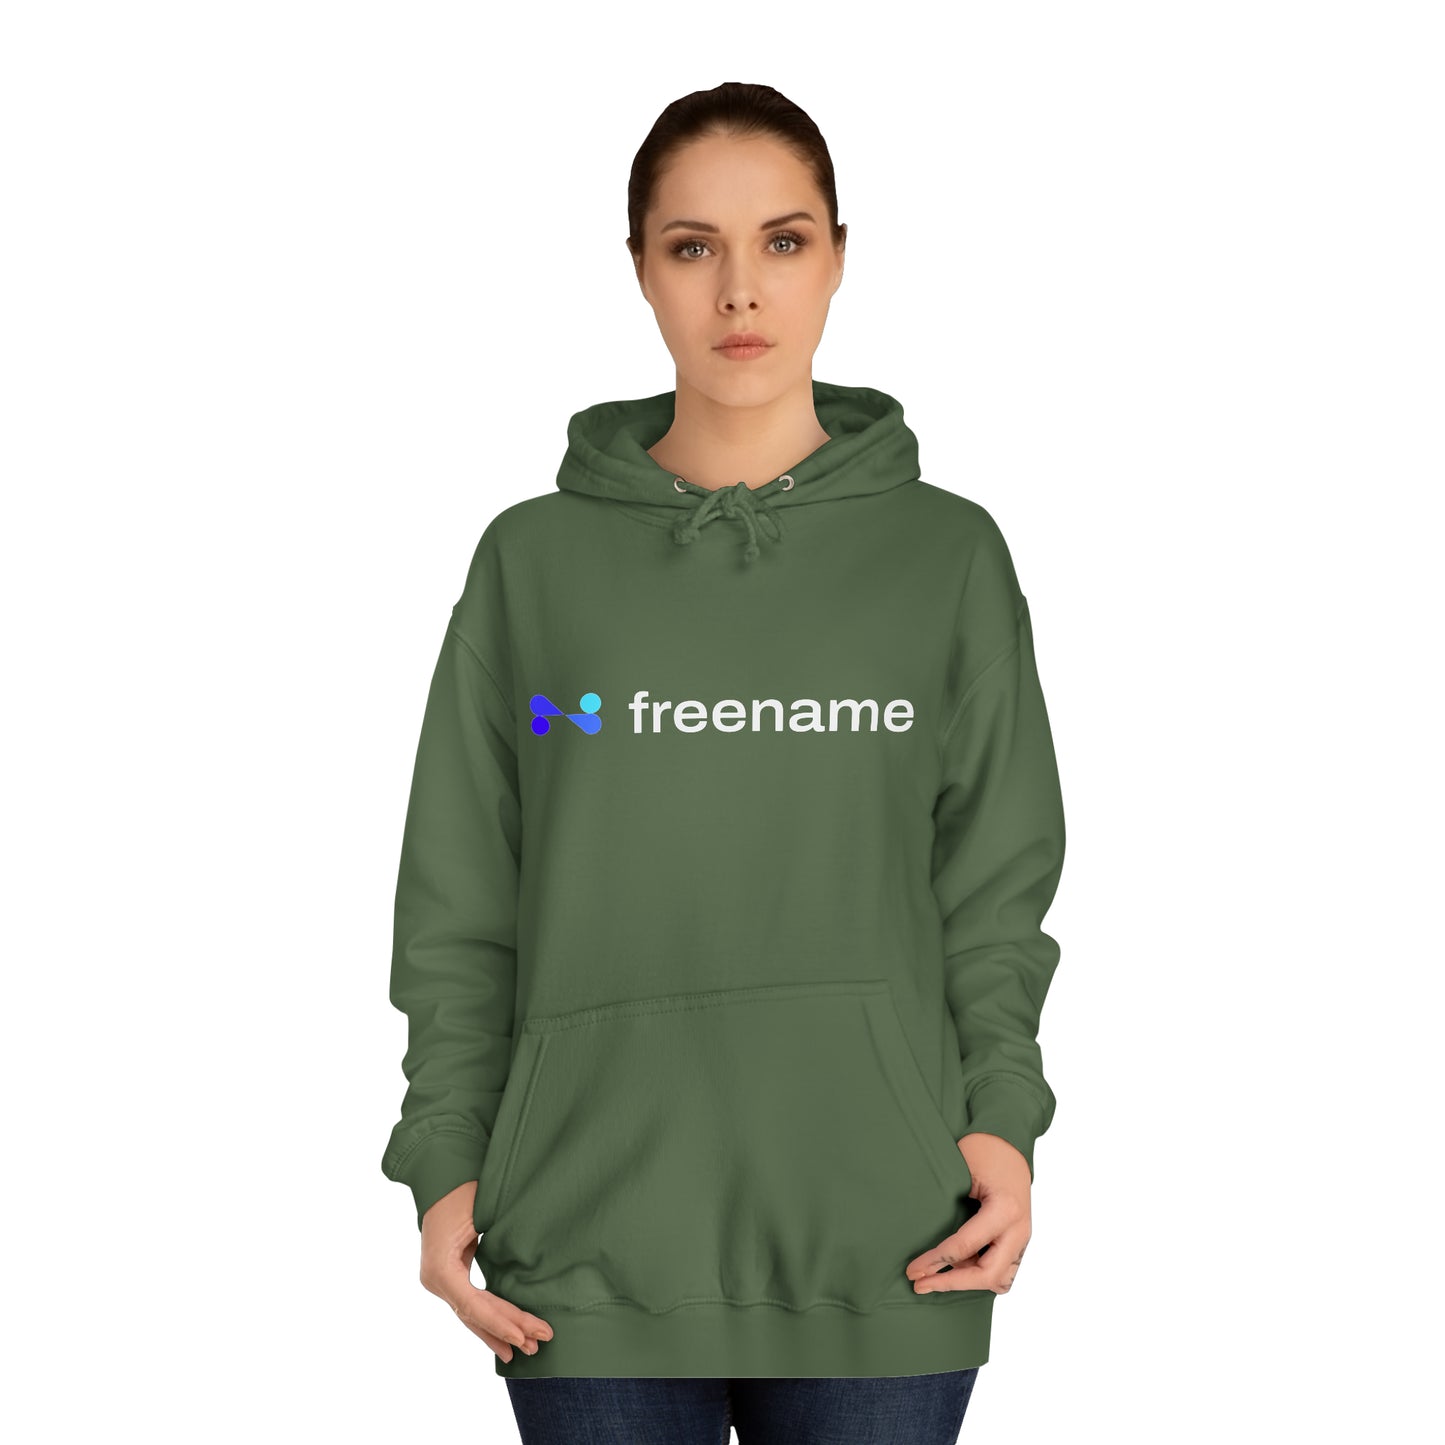 Freename - Premium Unisex Hoodie - Dark Colors